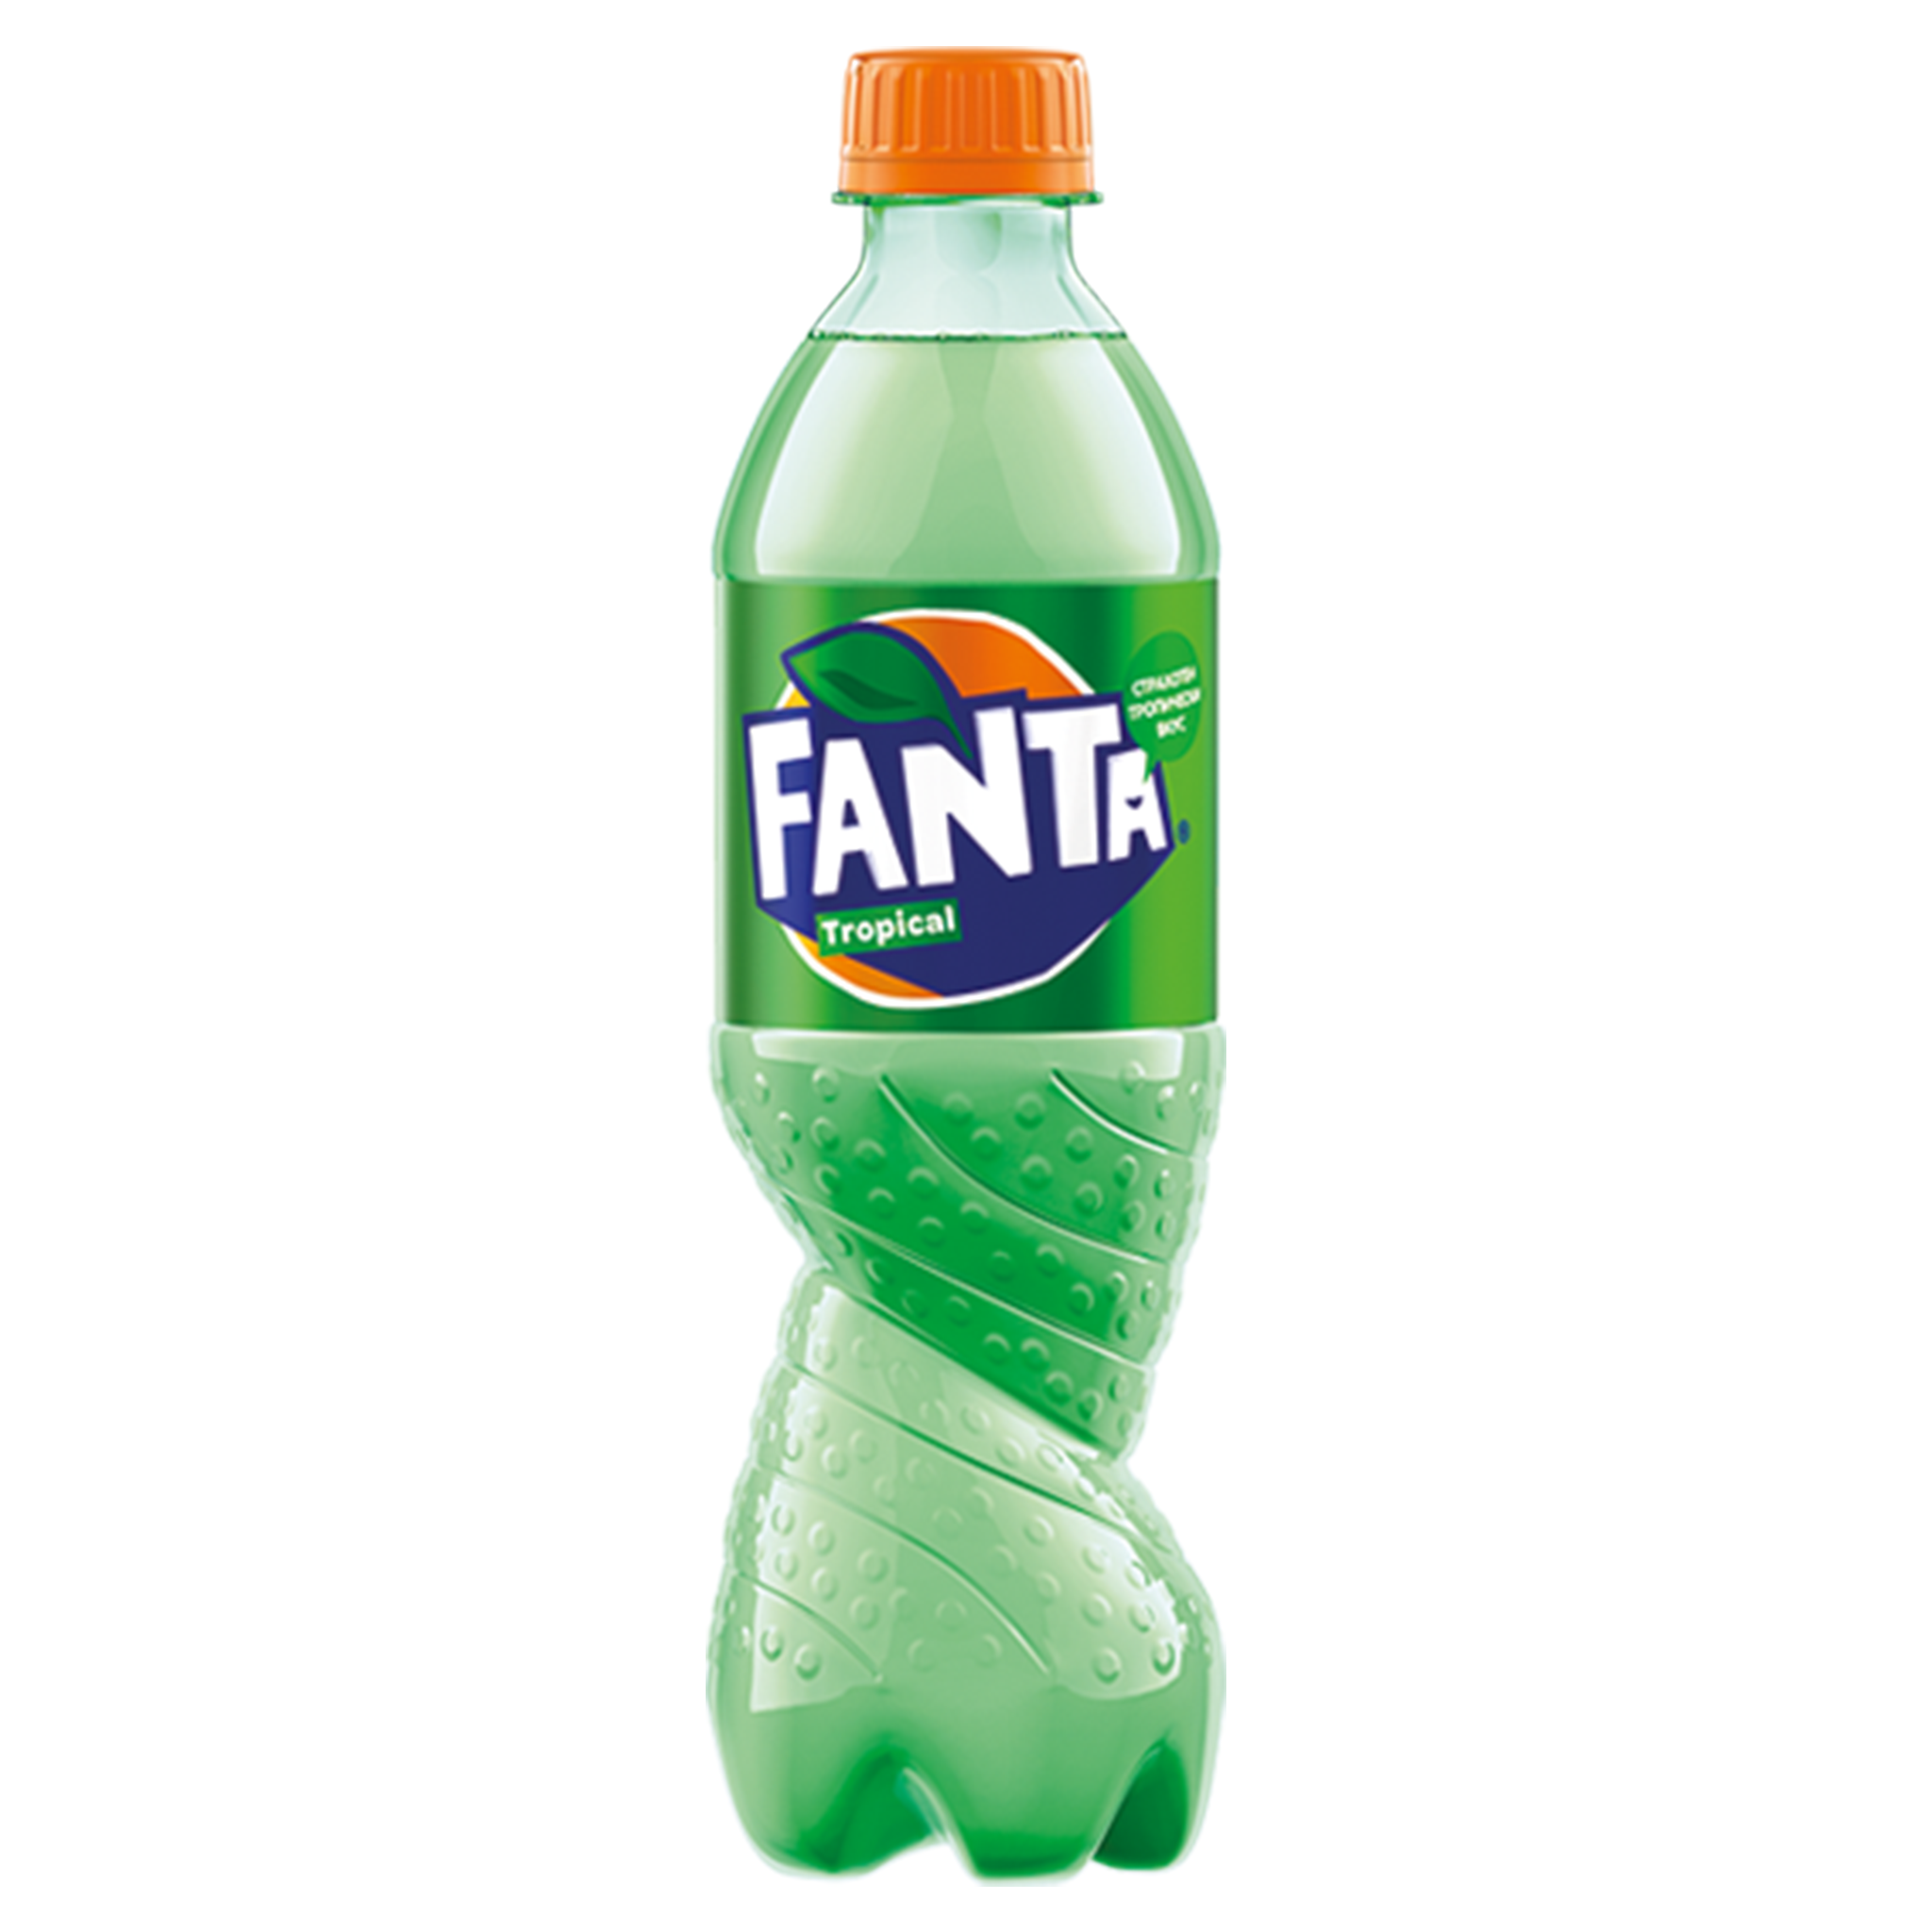 Fanta - Tropical (Europe)